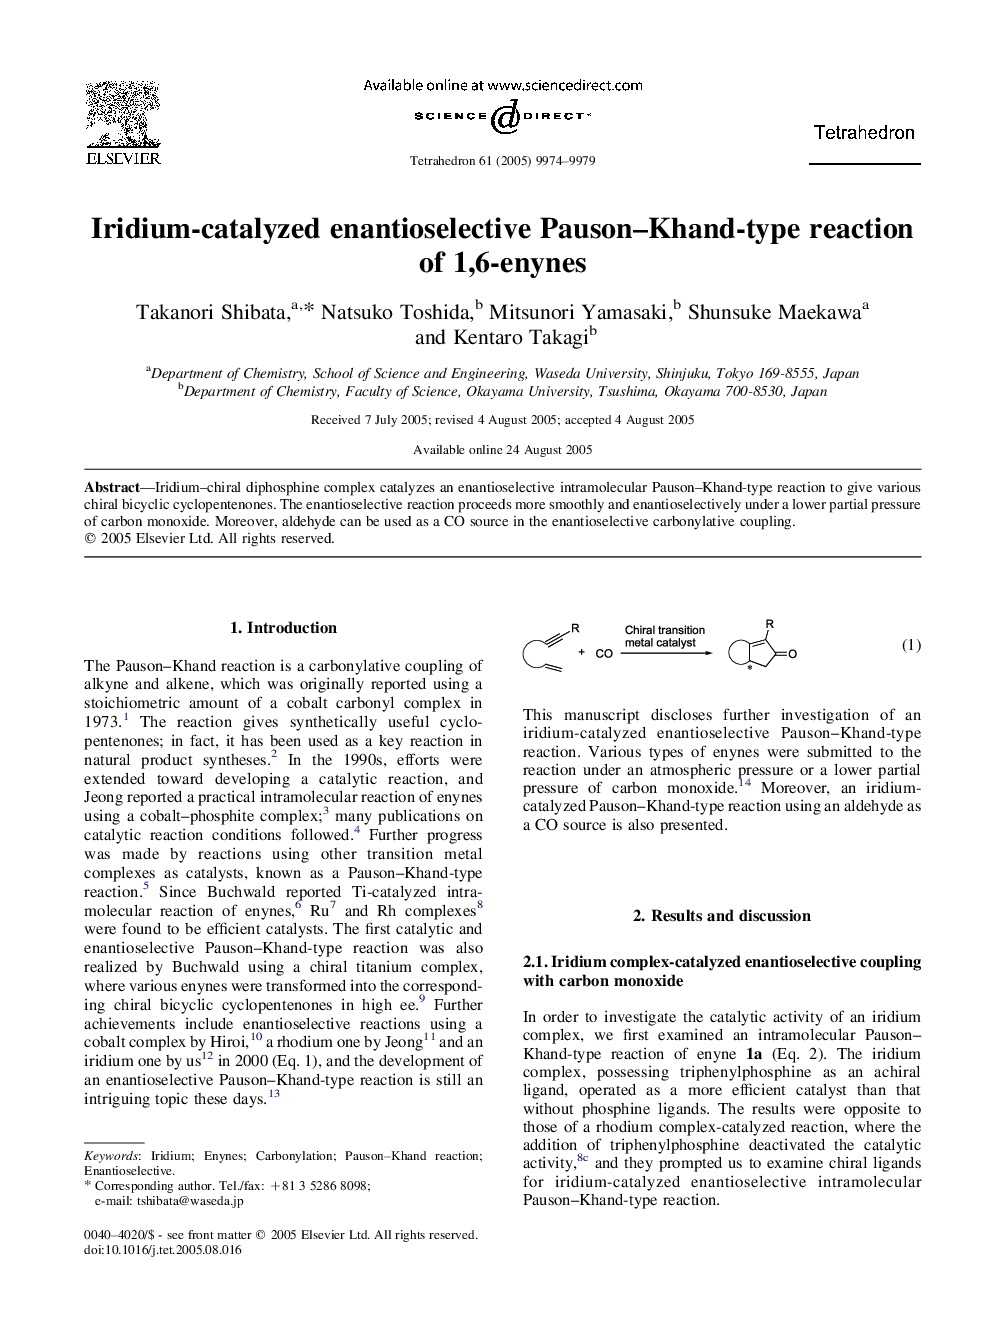 Iridium-catalyzed enantioselective Pauson-Khand-type reaction of 1,6-enynes